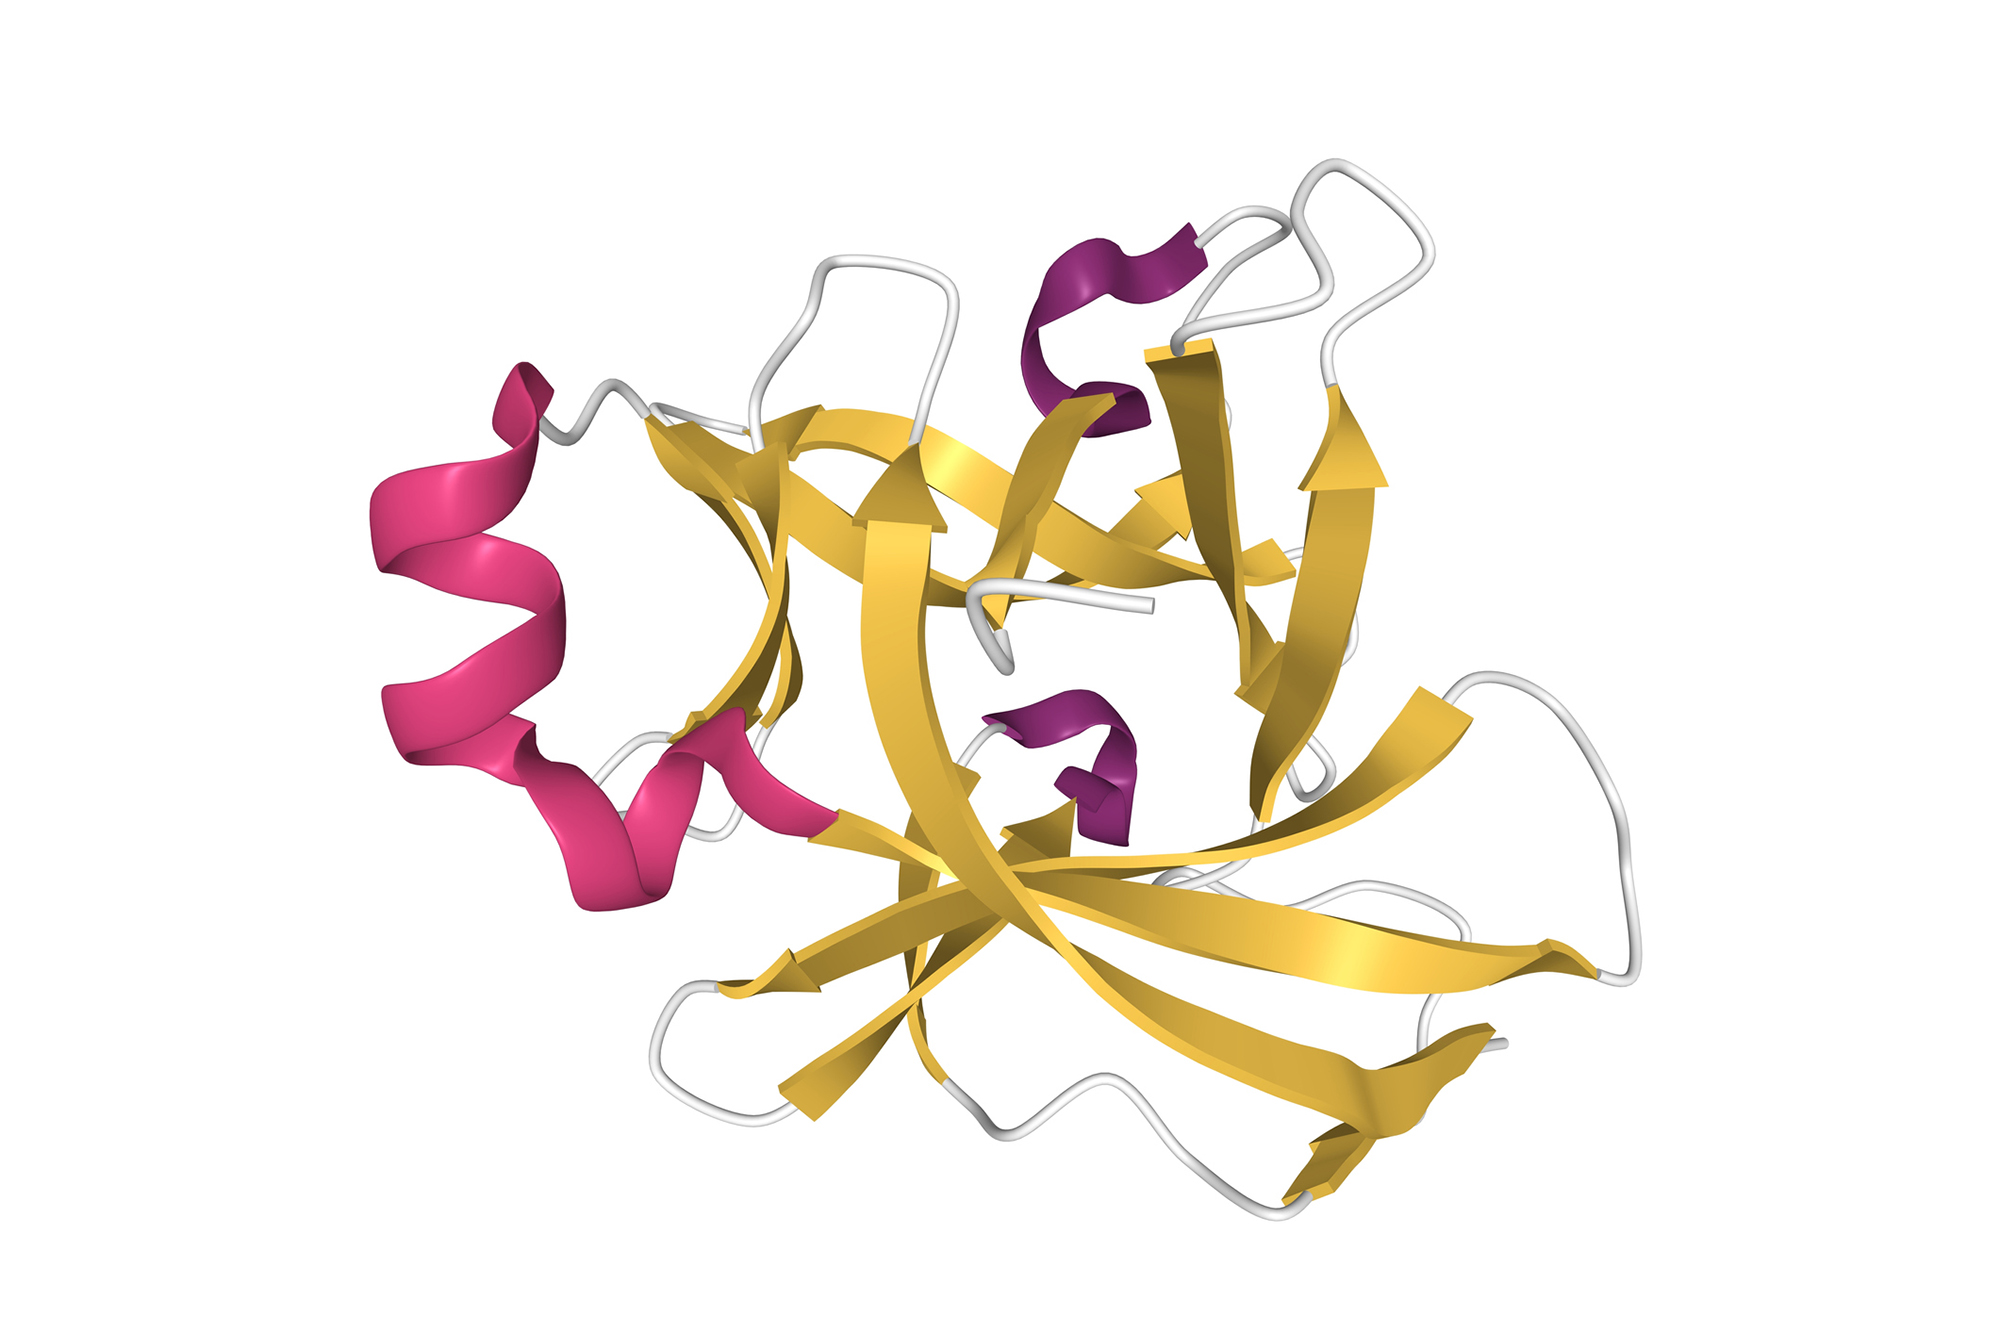 Microscopic rendering of interleukin 18 protein.